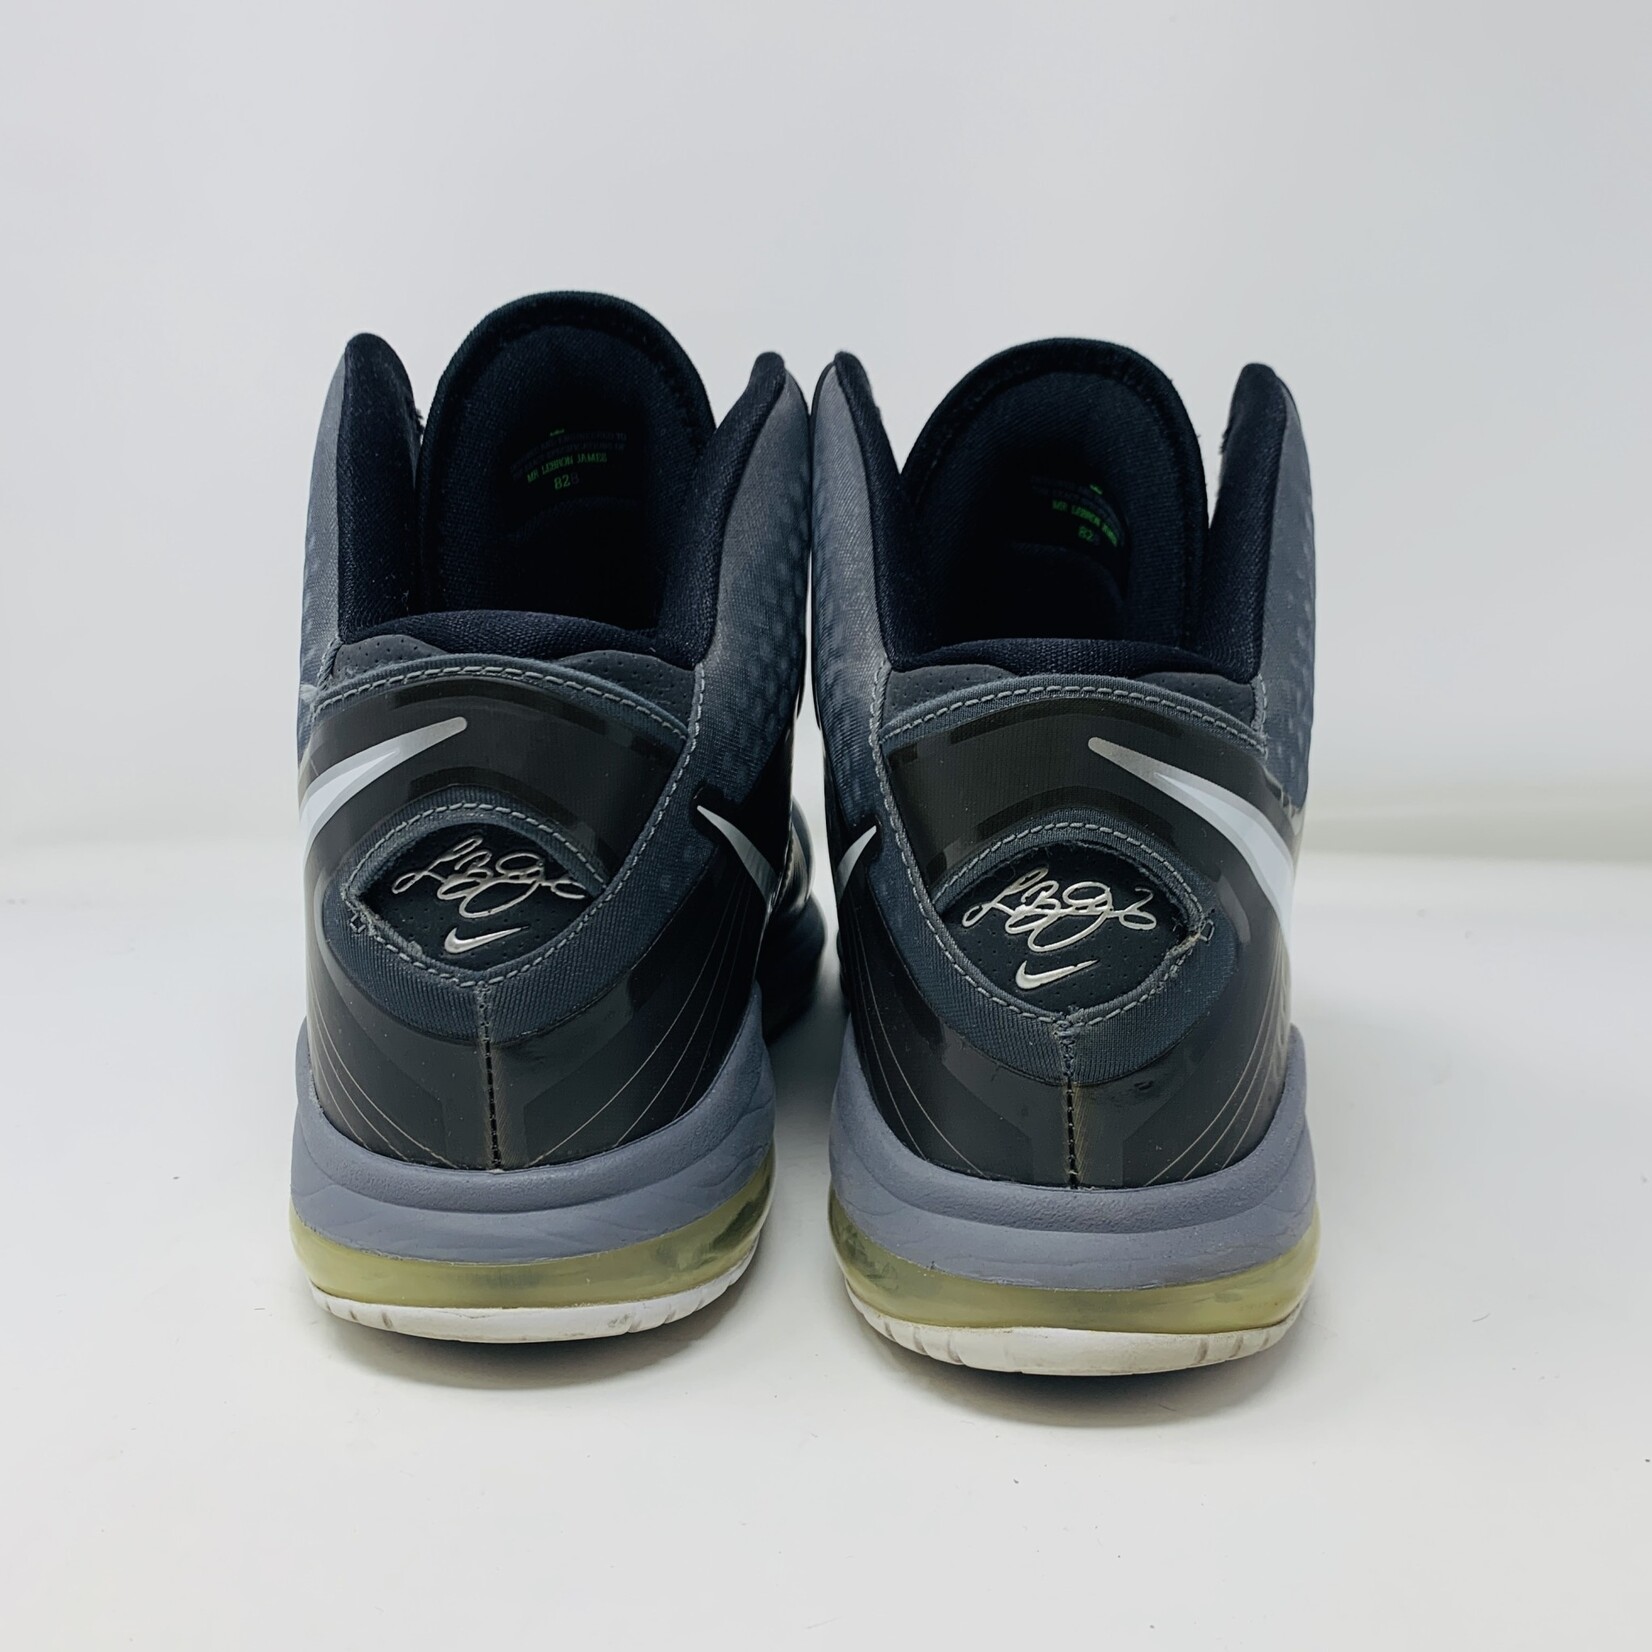 Jordan Nike LeBron 8 Cool Grey